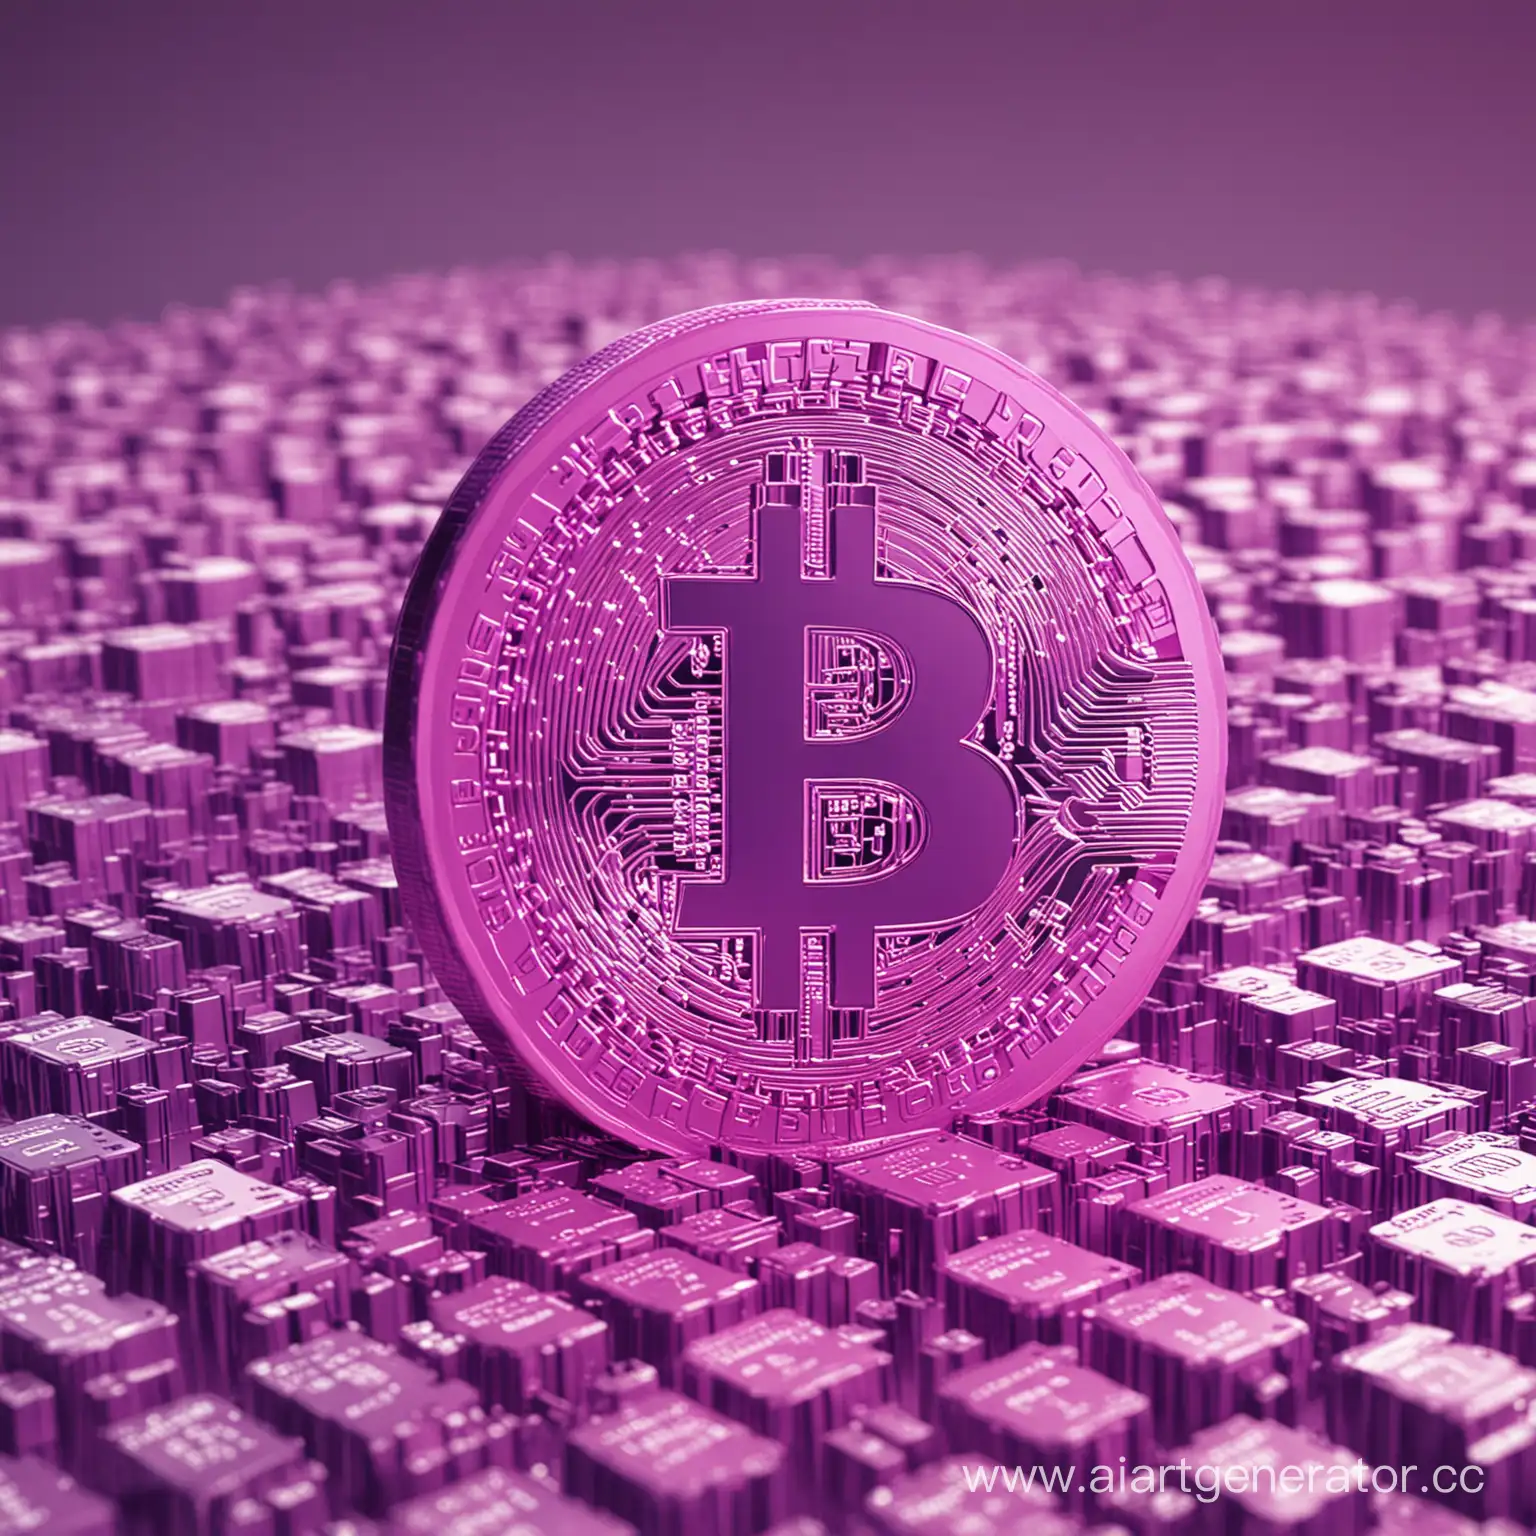 Vibrant-3D-Bitcoin-Illustration-in-PurplePink-Digital-Space